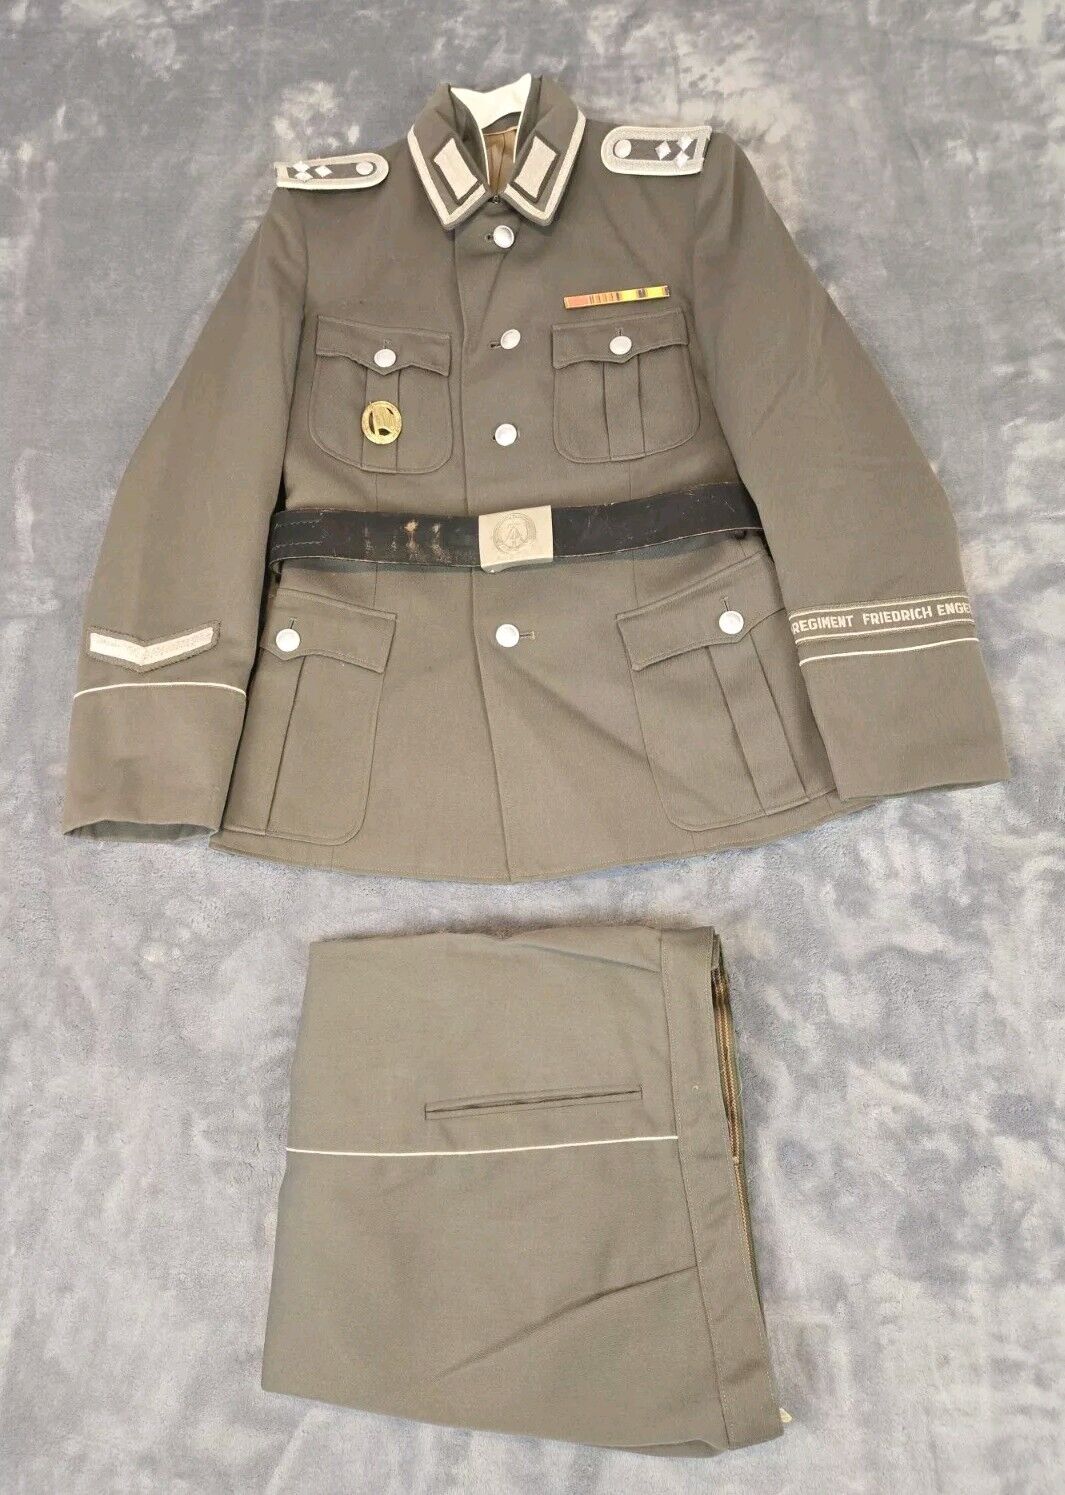 East German Army Enlisted Uniform Tunic Jacket NVA DDR Original Set